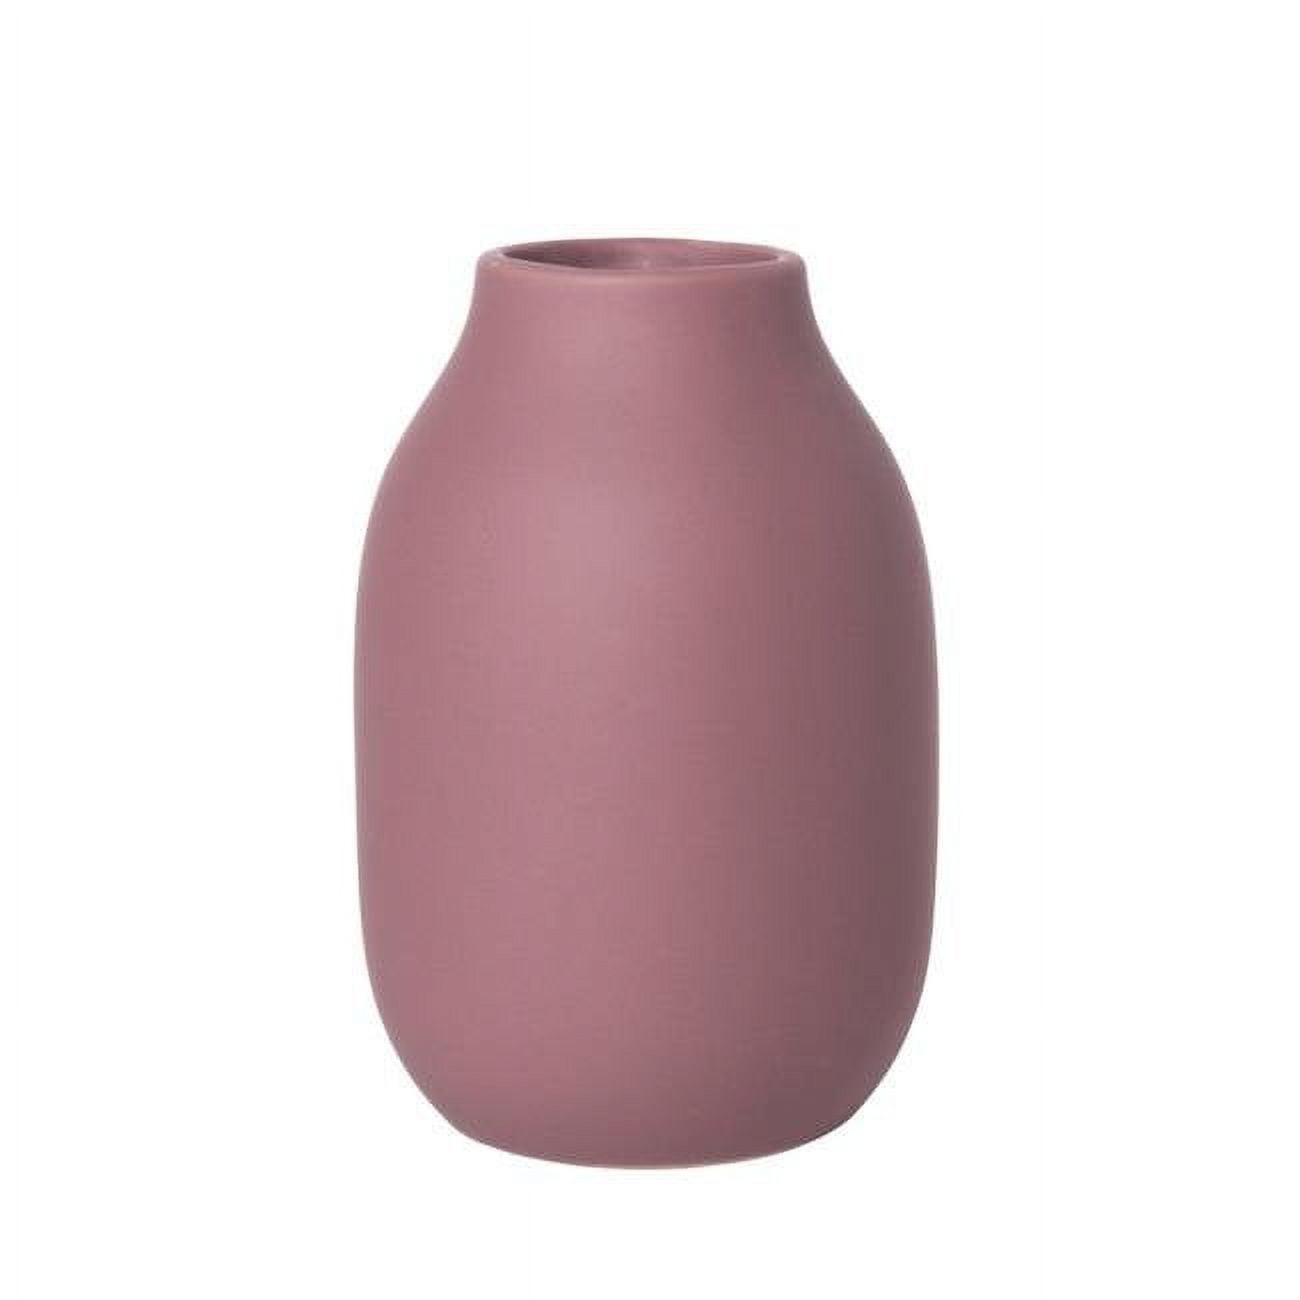 Blomus 65903 6 x 4 in. Colora Porcelain Vase, Rose Dust